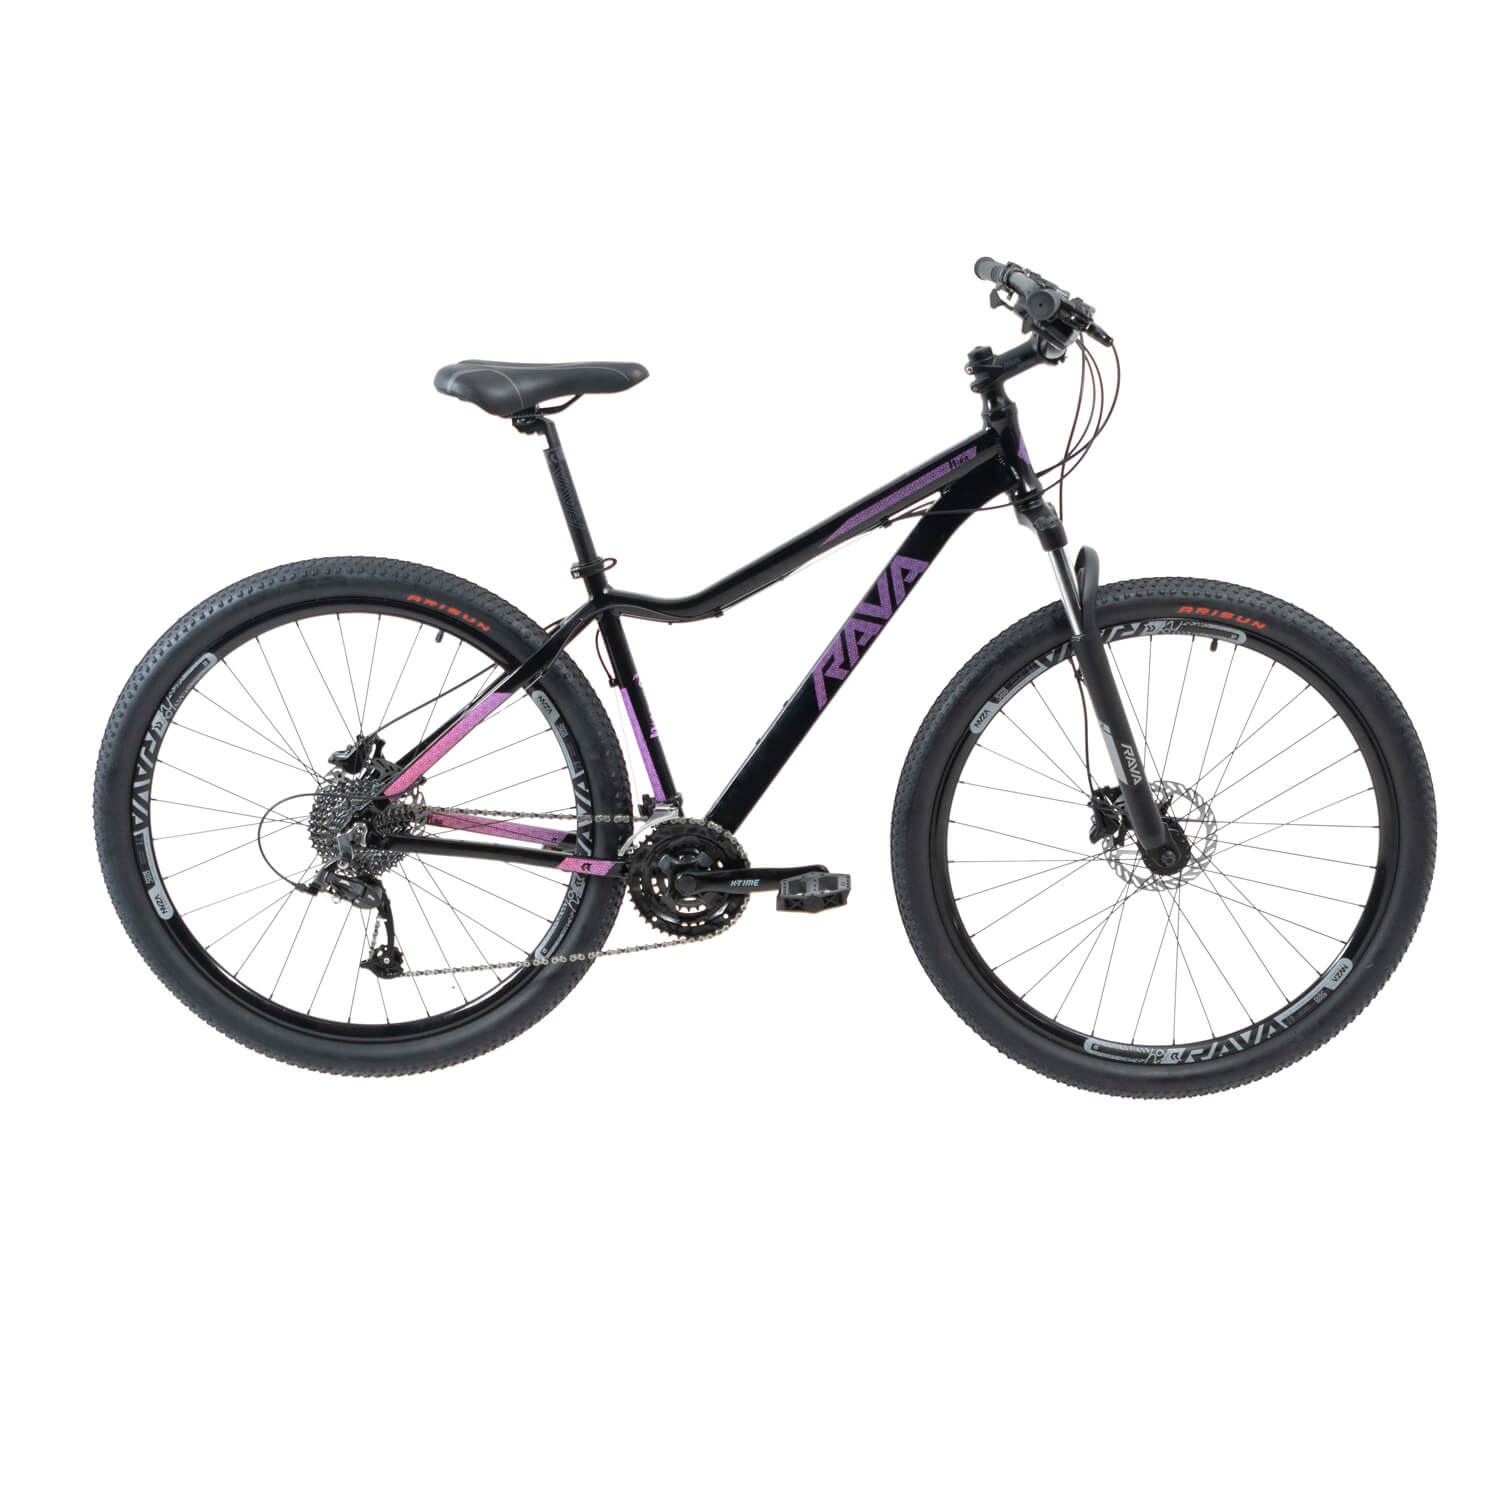 Bicicleta Rava Nina | 30 v. - Preto/Pink/Violeta, 15.5"